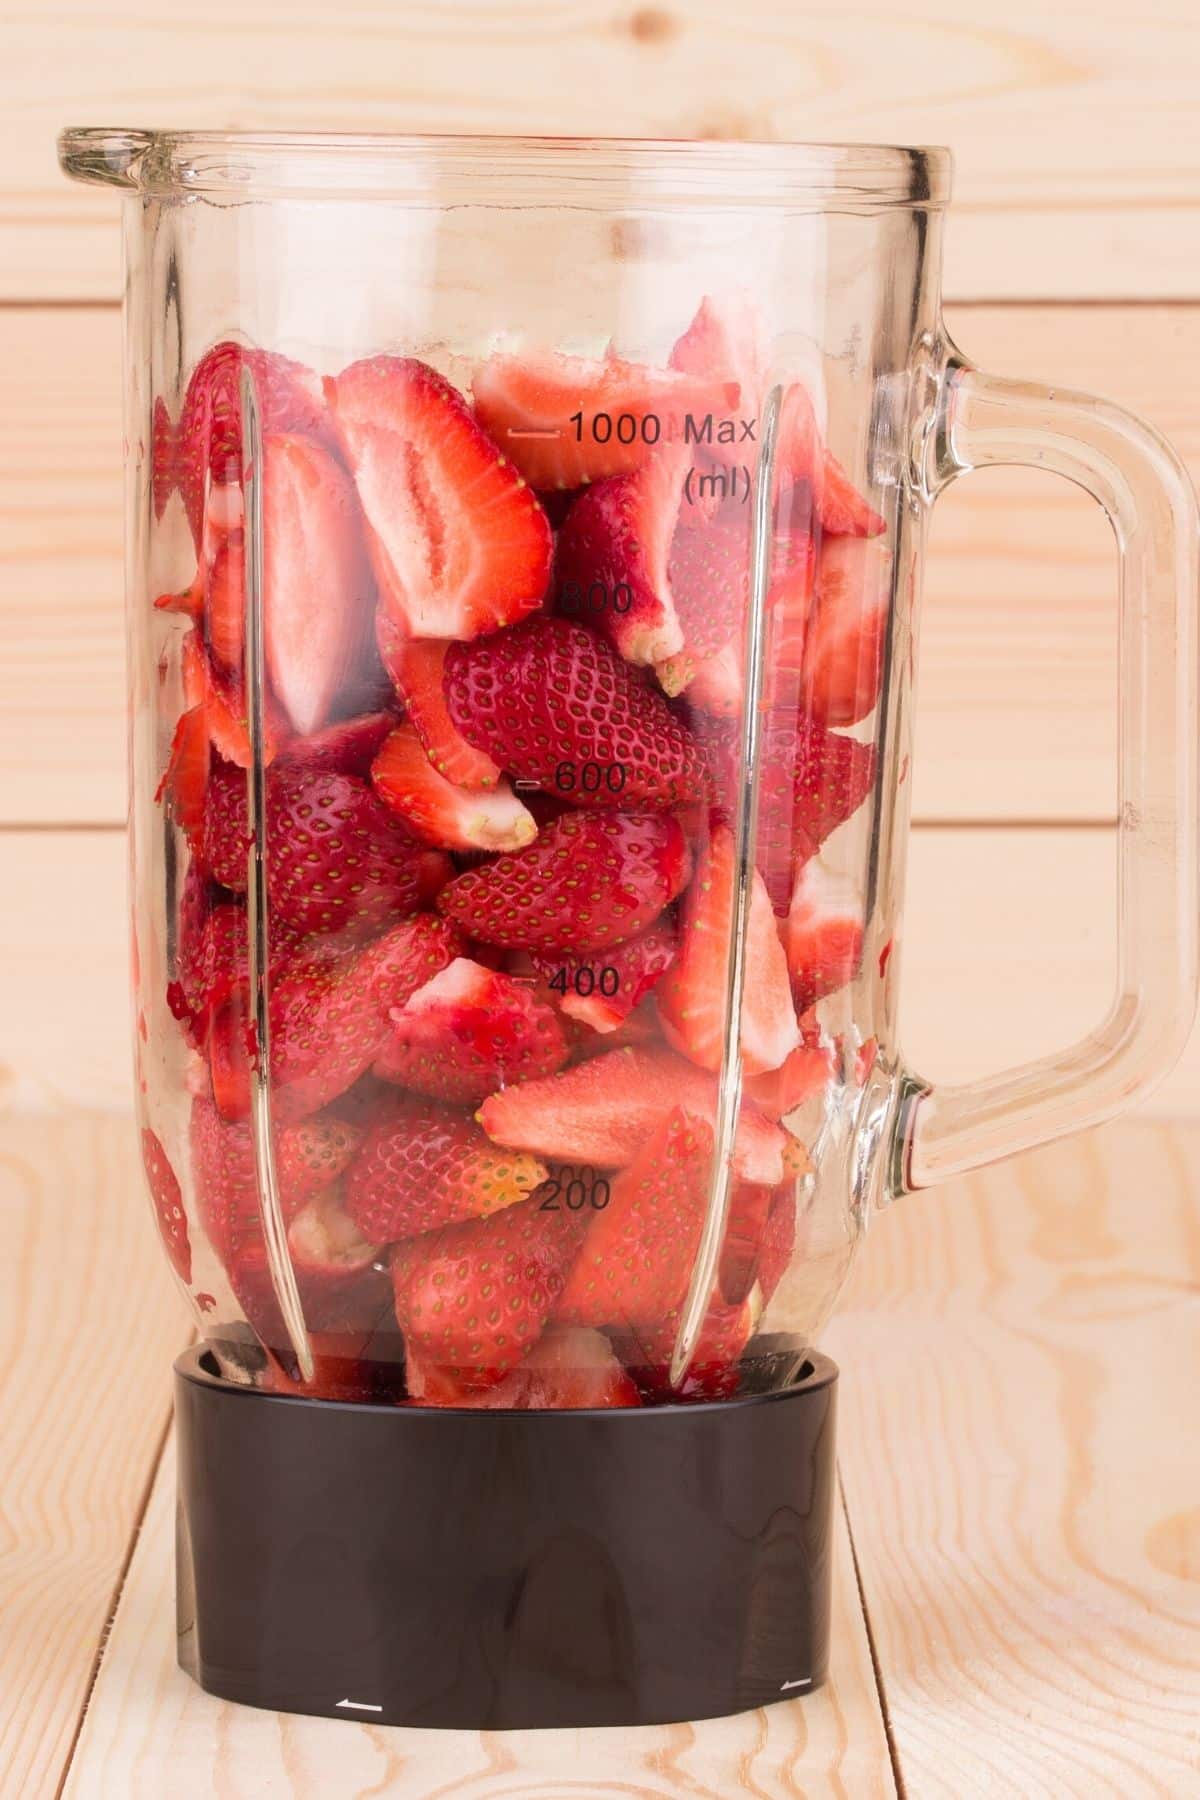 https://www.cleaneatingkitchen.com/wp-content/uploads/2022/05/strawberries-in-blender.jpg